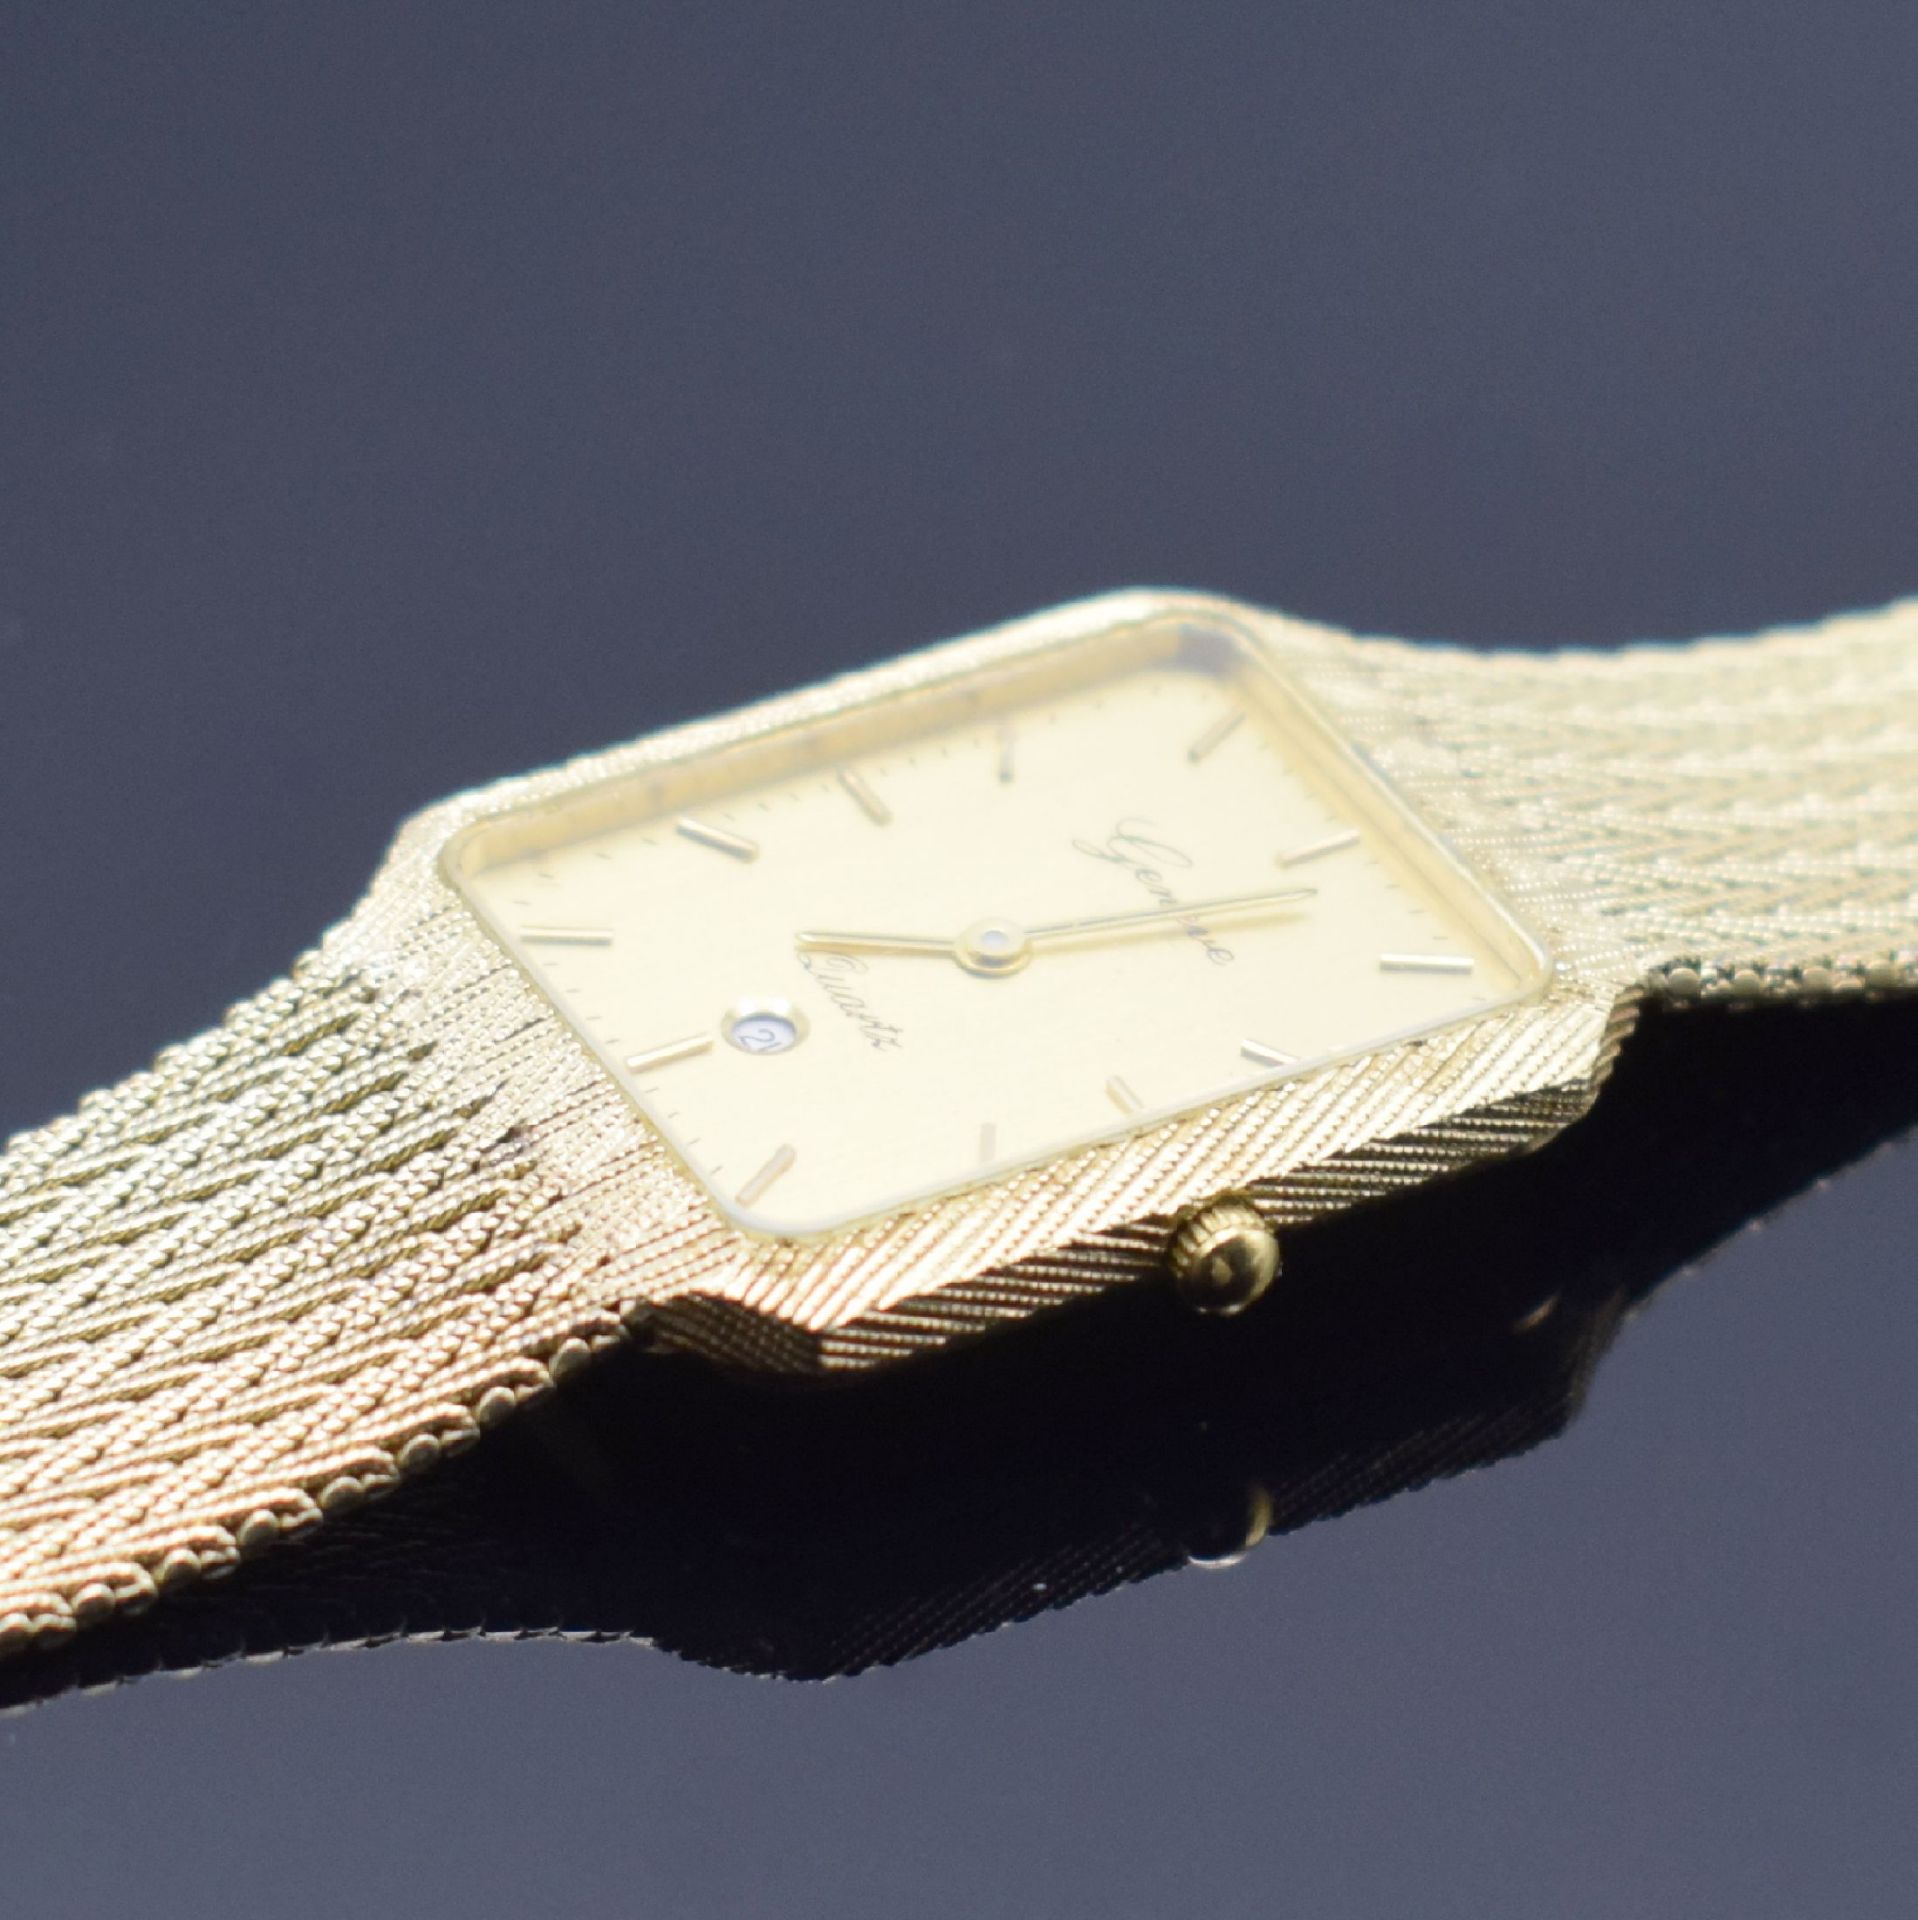 GENEVE Armbanduhr in GG 585/000, Schweiz um 1980, quarz, - Image 4 of 5